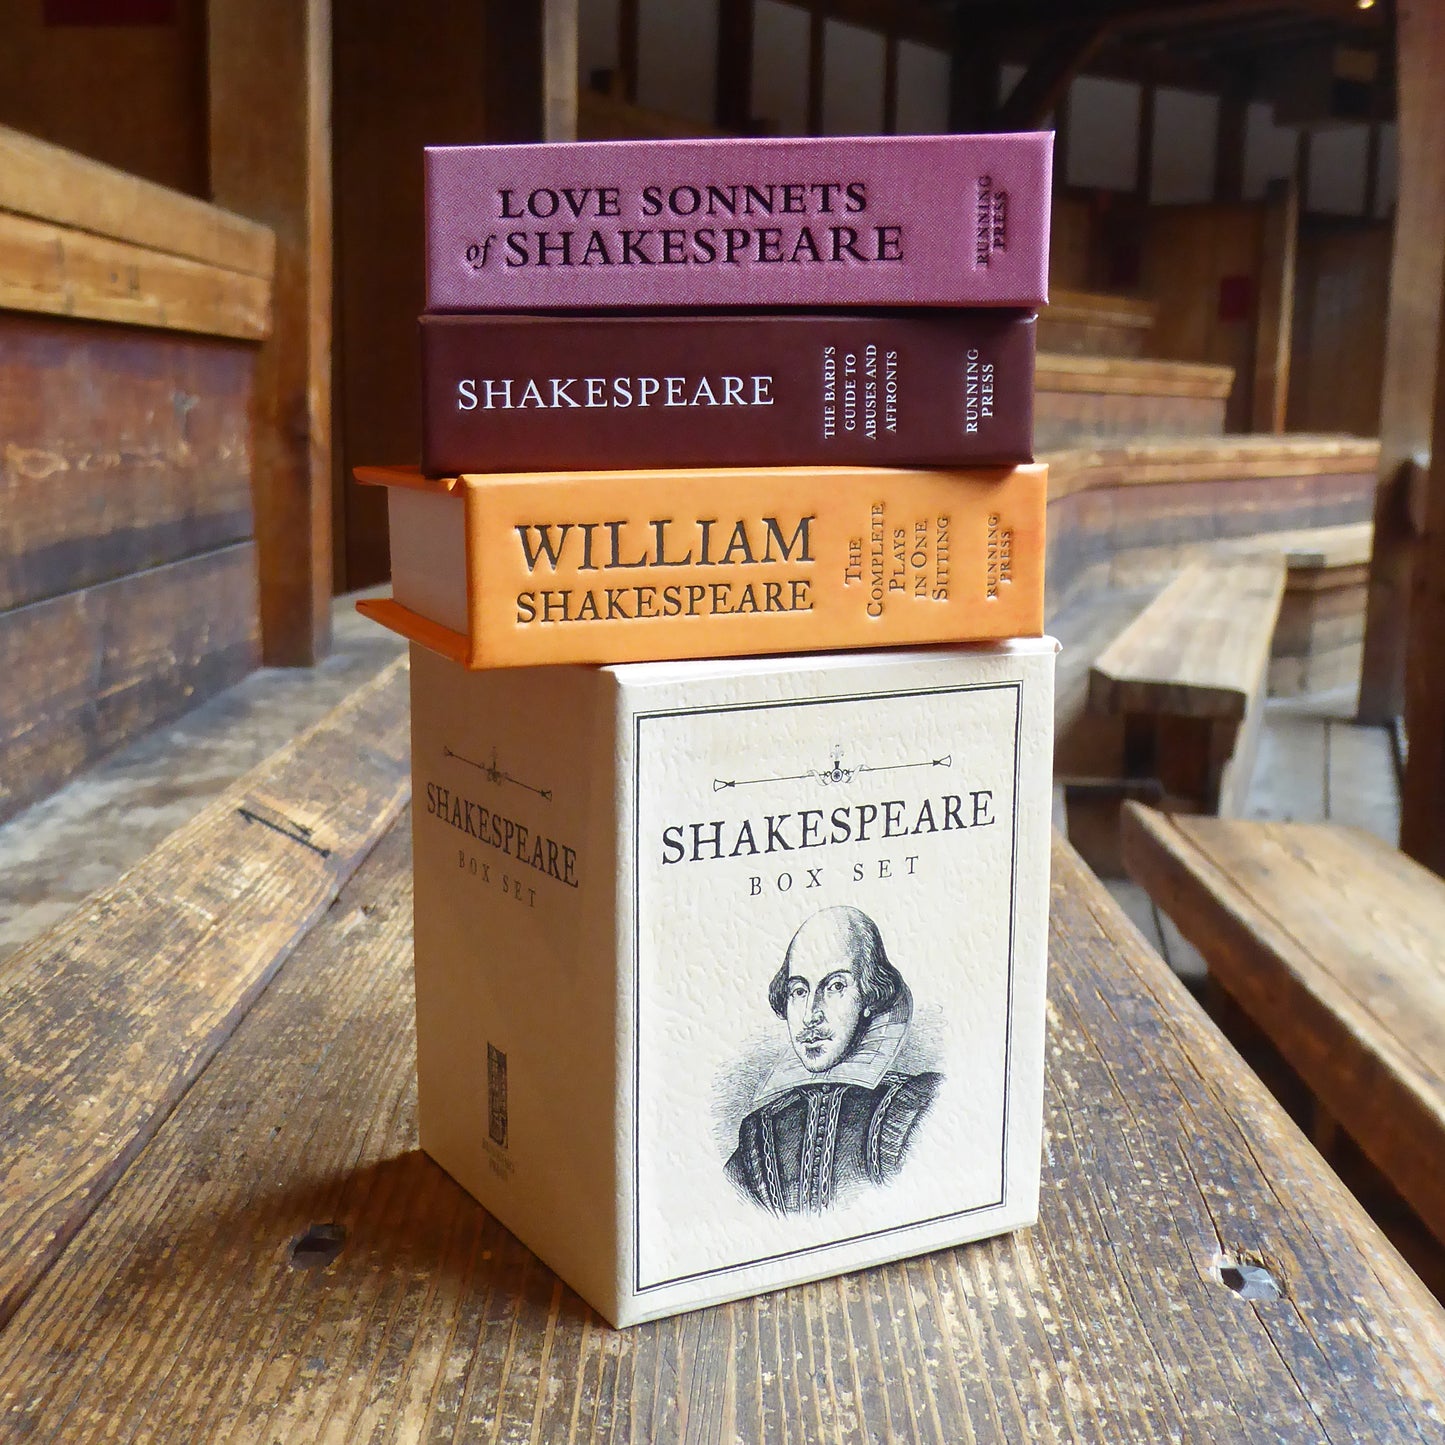 Miniature box set containing three novelty Shakespeare books in a hardback slipcase.